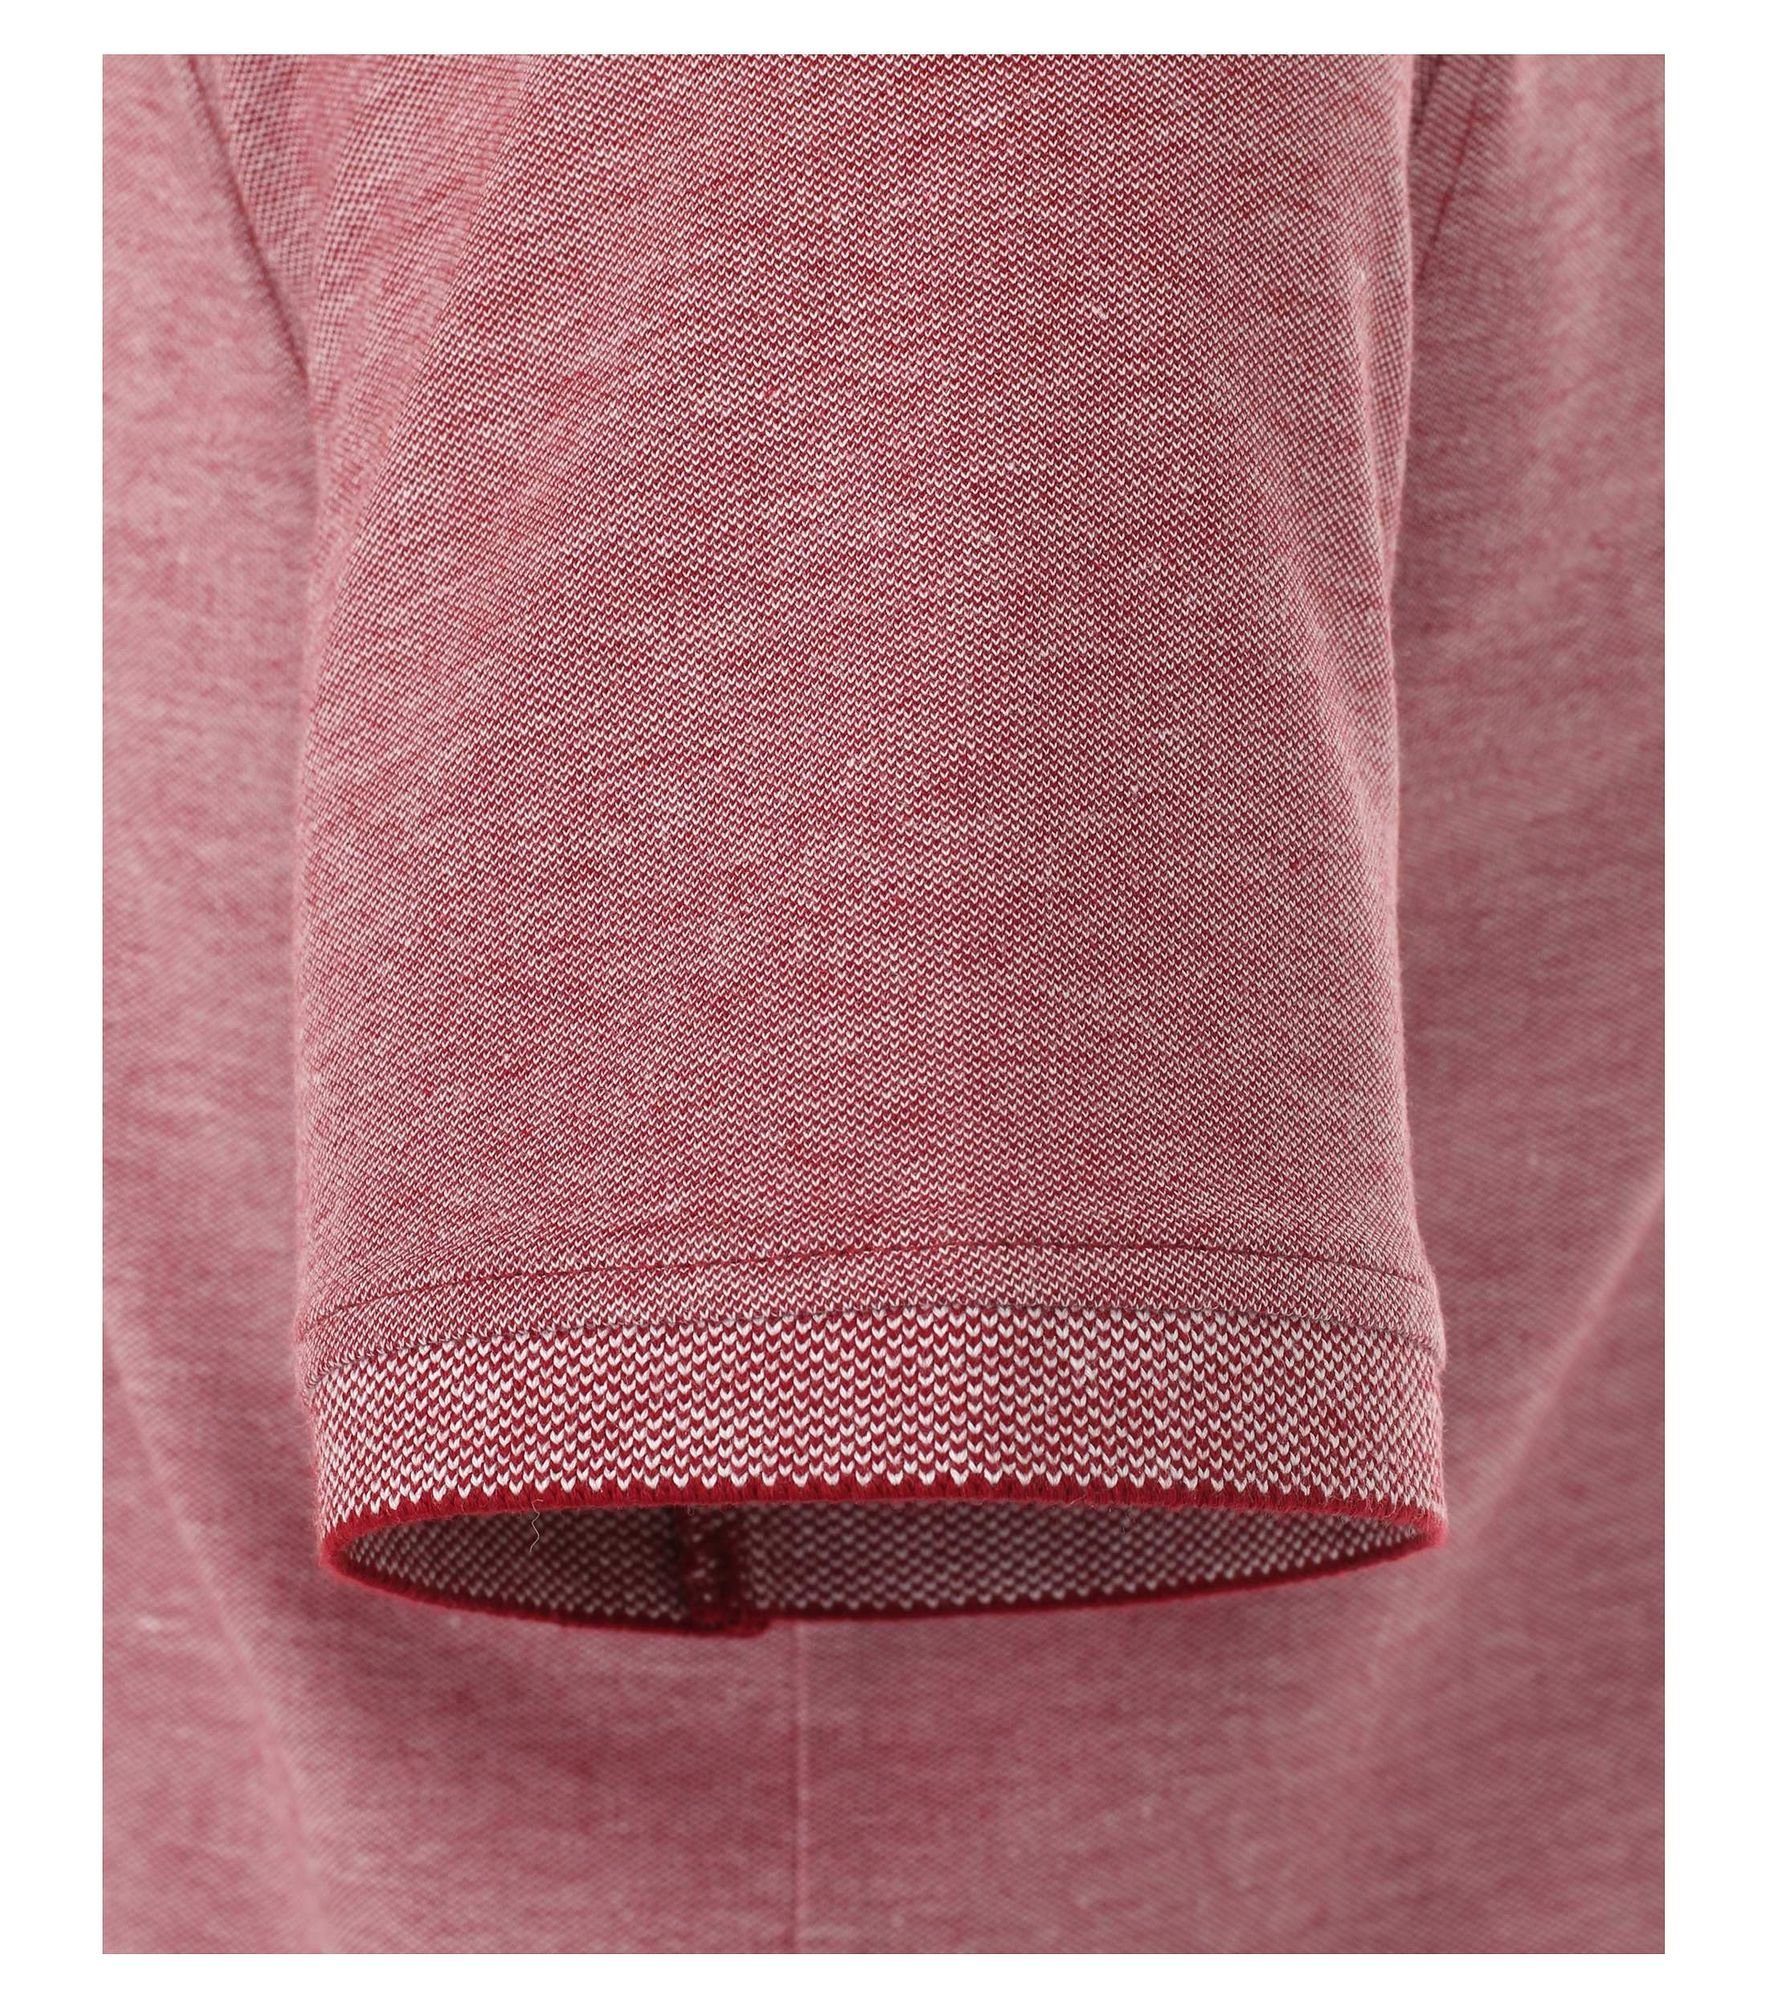 CASAMODA Poloshirt Polo-Shirt unifarben Poloshirt (438) Rot